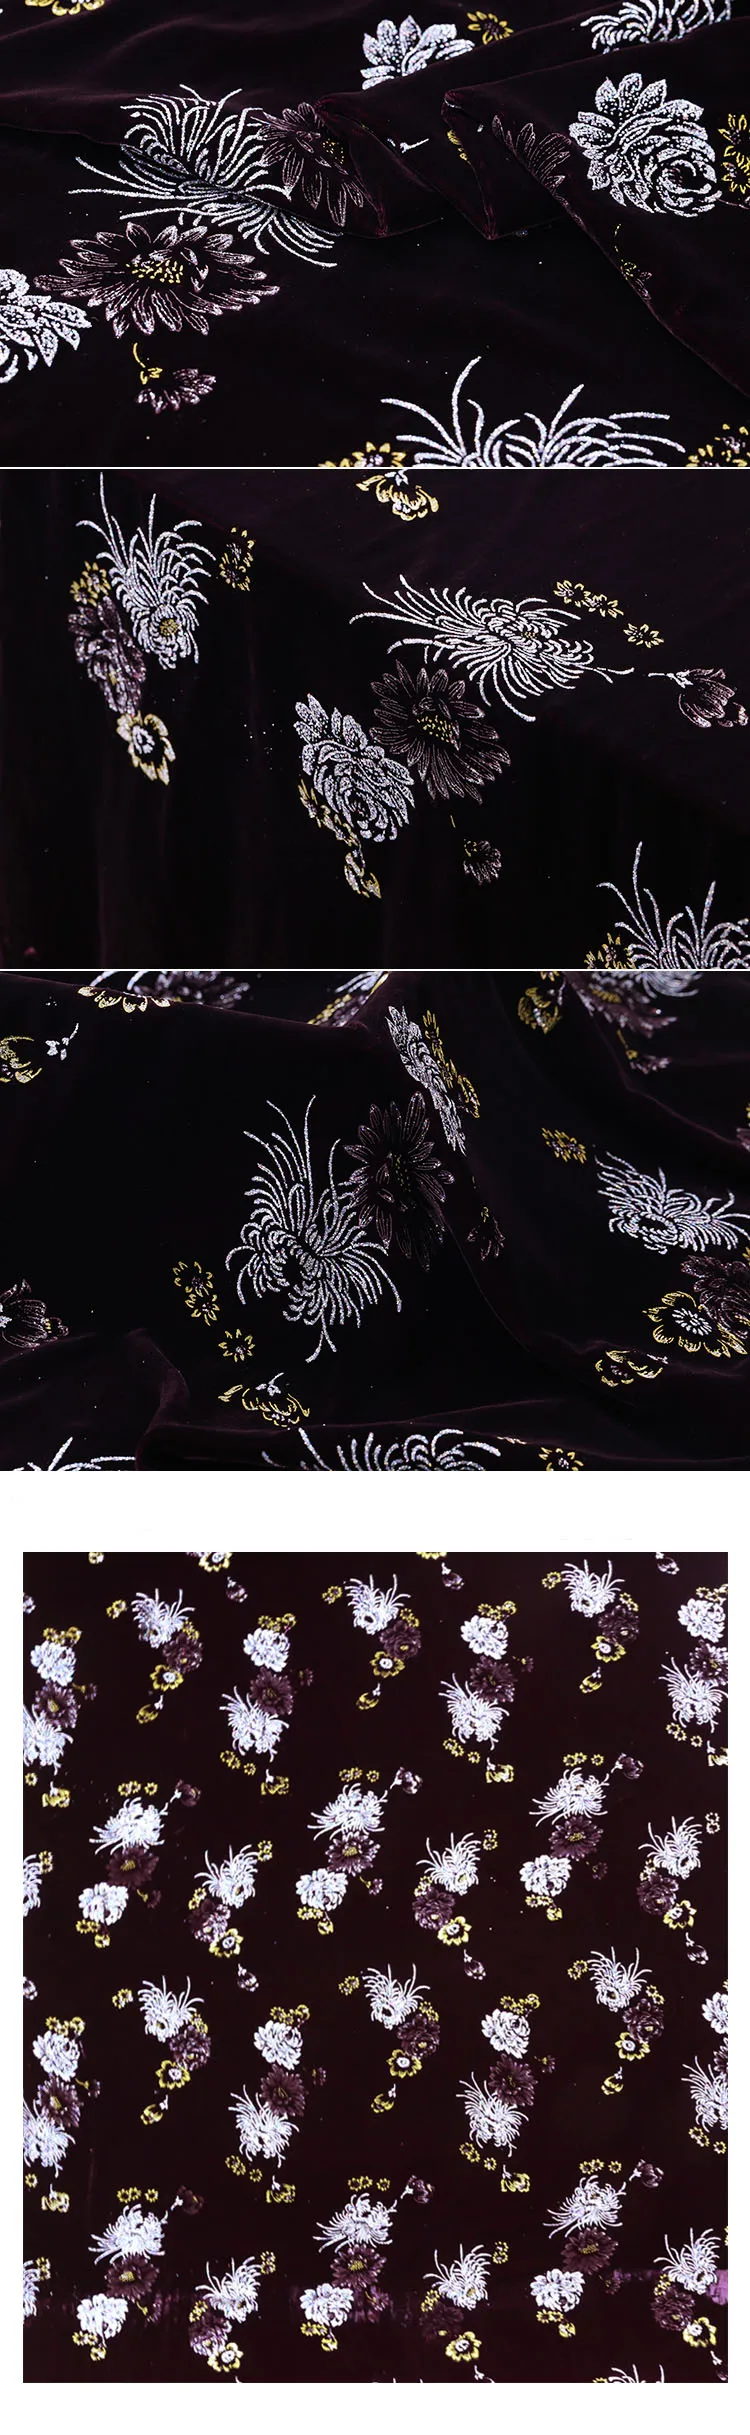 kpop Горячая тиснение цветы Шелковый бархат ткань для платья tissu bazin riche getzner Африканский telas por metro stoffen tissus